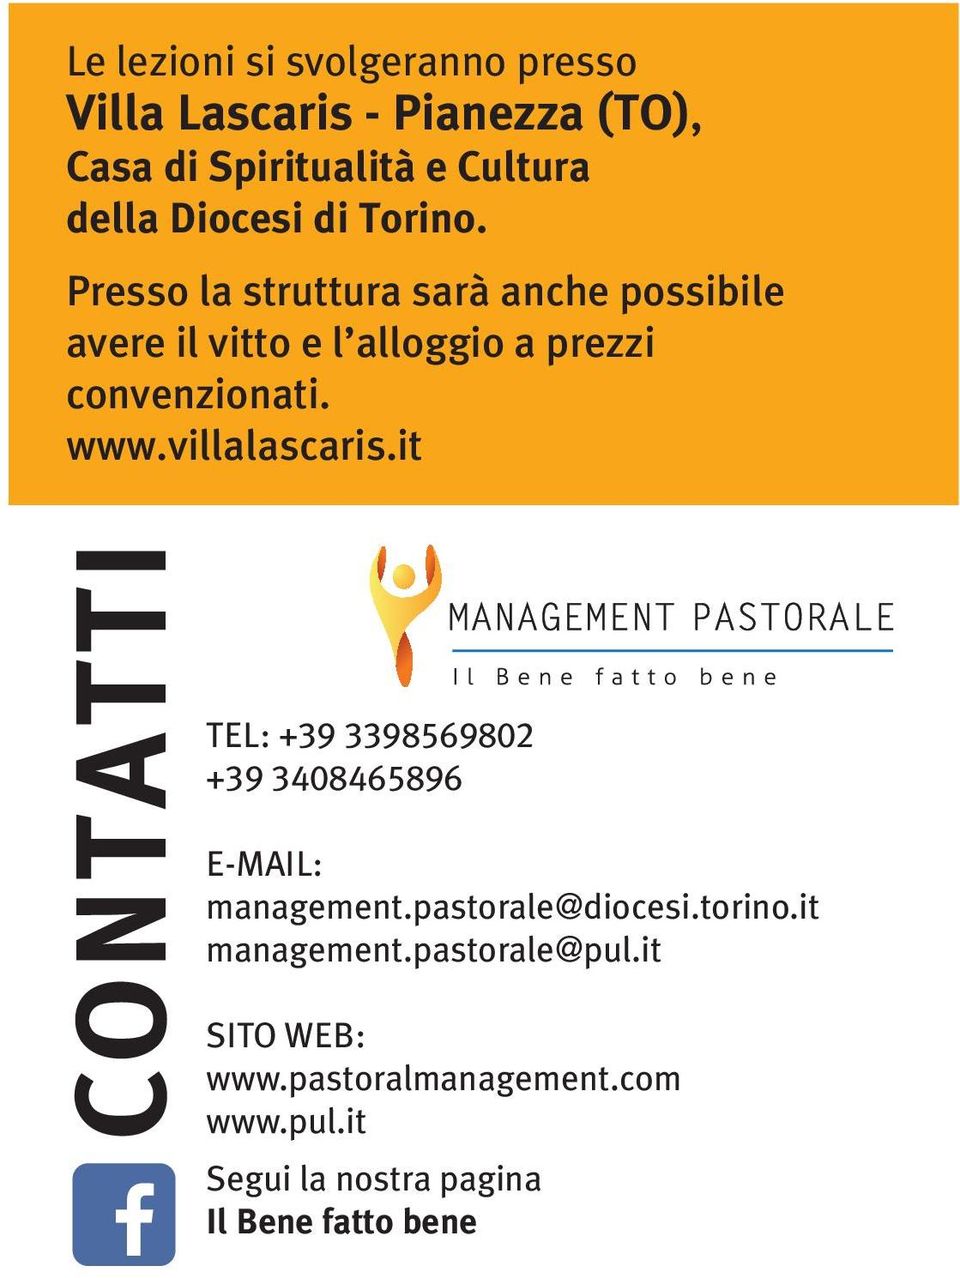 villalascaris.it CONTATTI TEL: +39 3398569802 +39 3408465896 E-MAIL: management.pastorale@diocesi.torino.